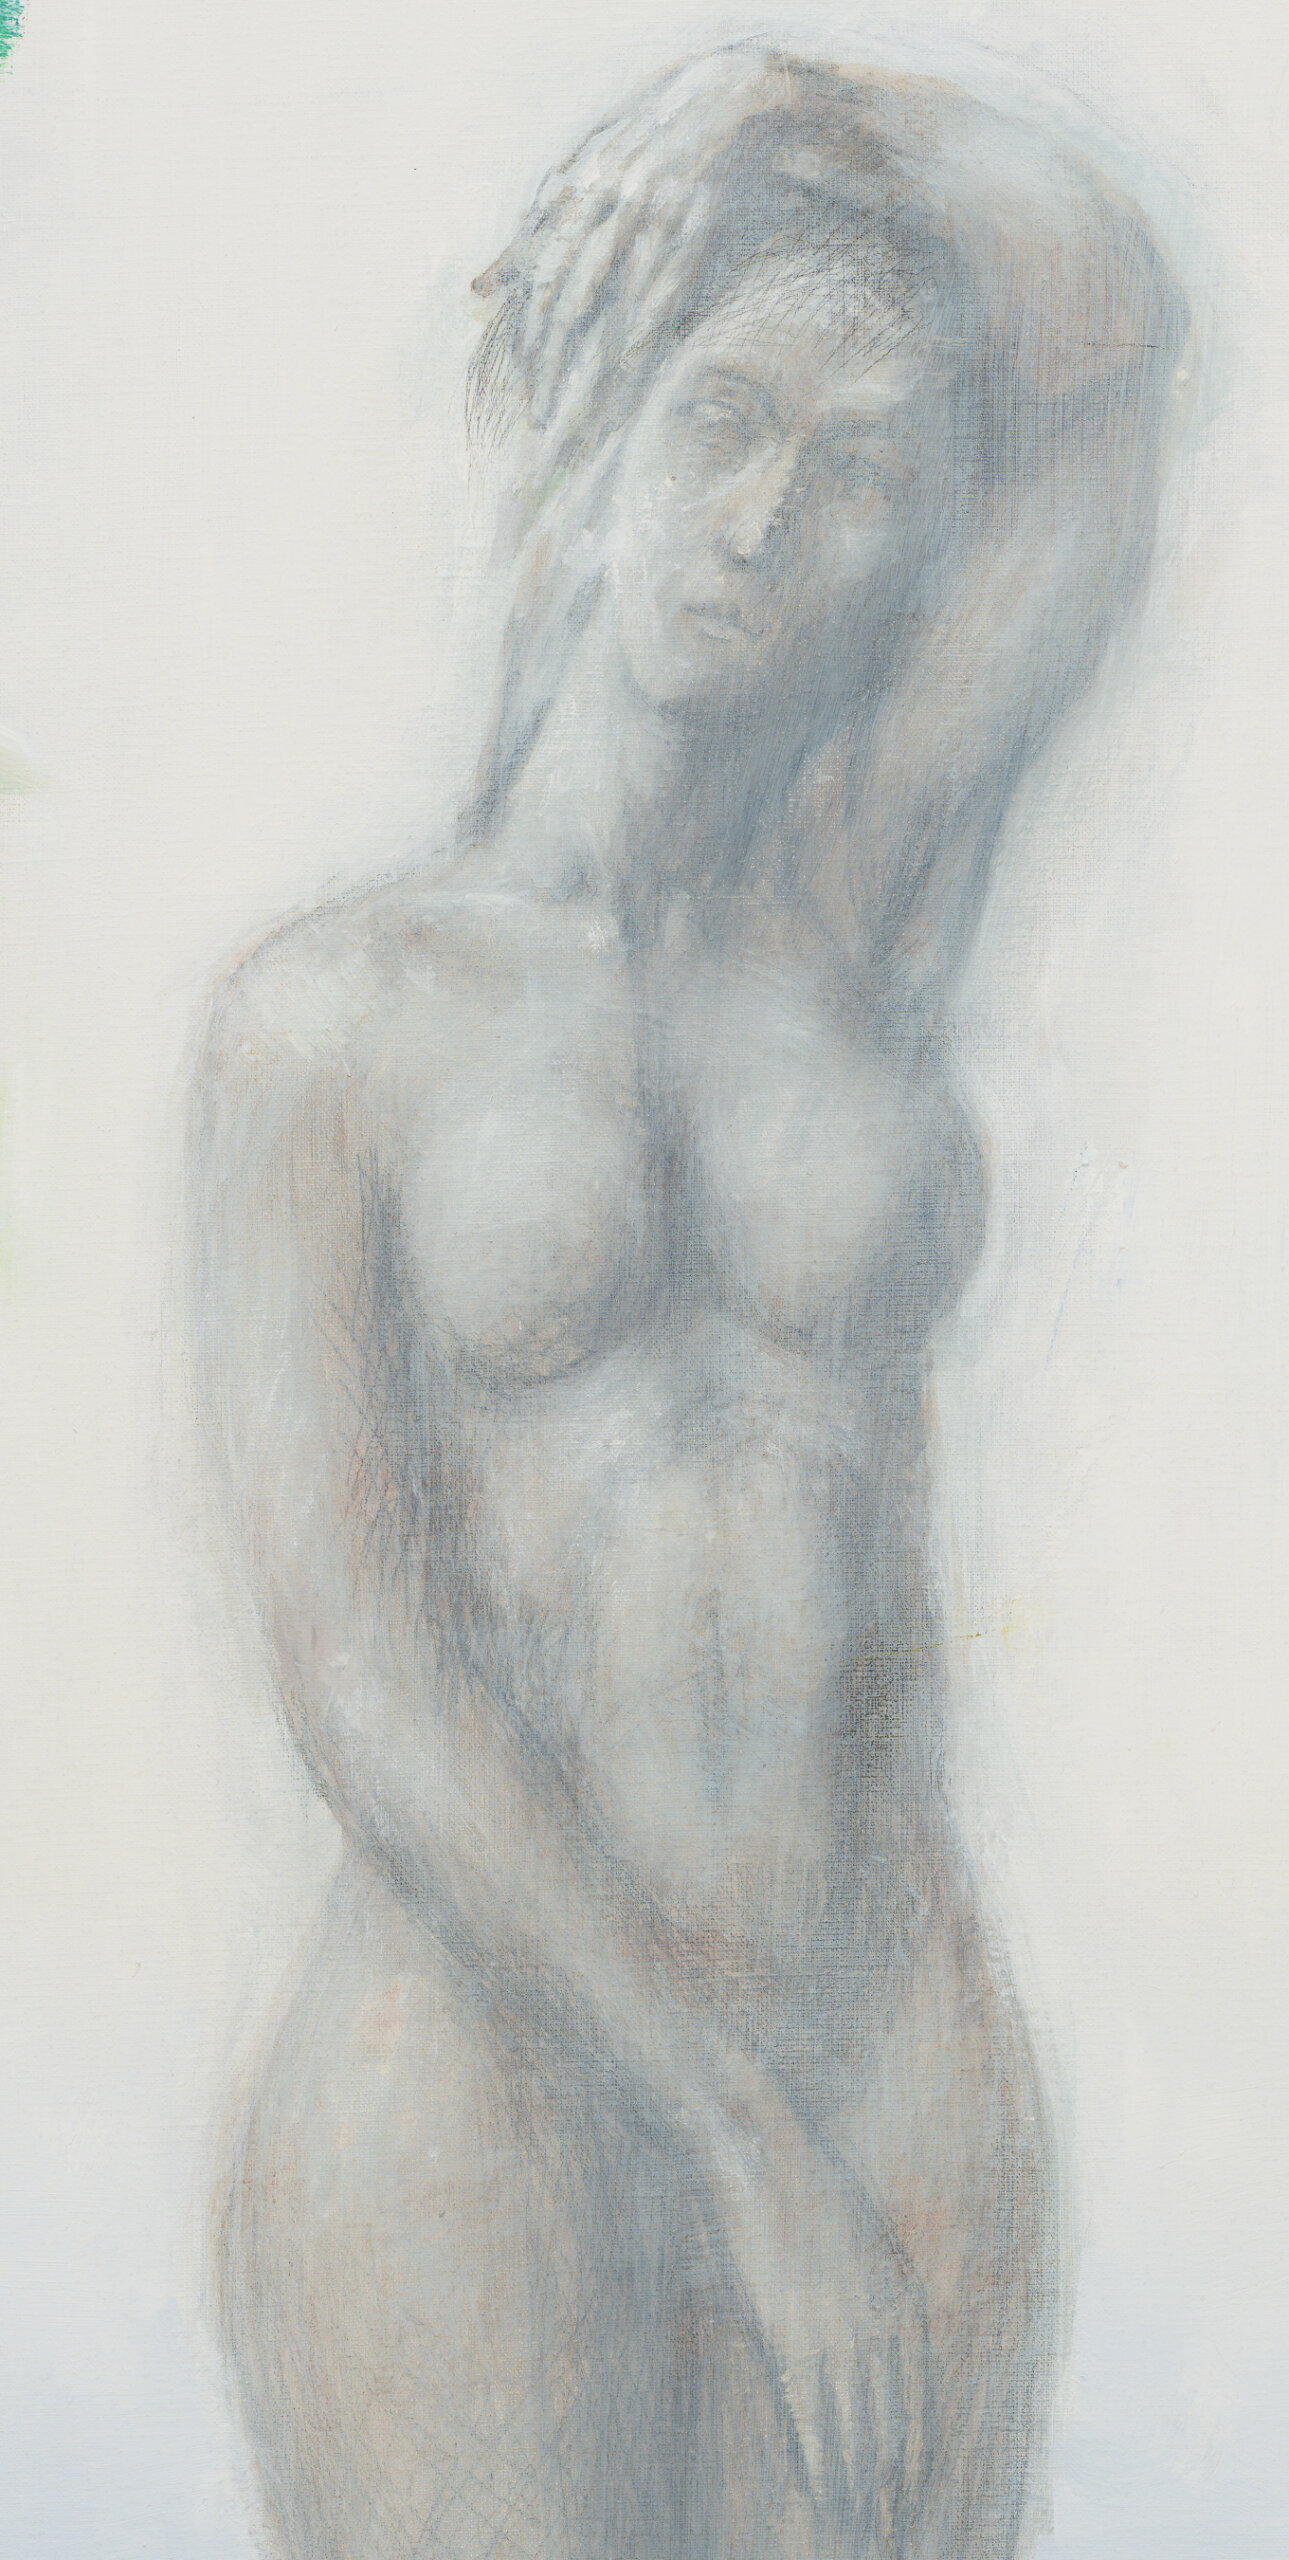 Enn Põldroos “Susanna supleb“, 2014. 102 x 67 cm.